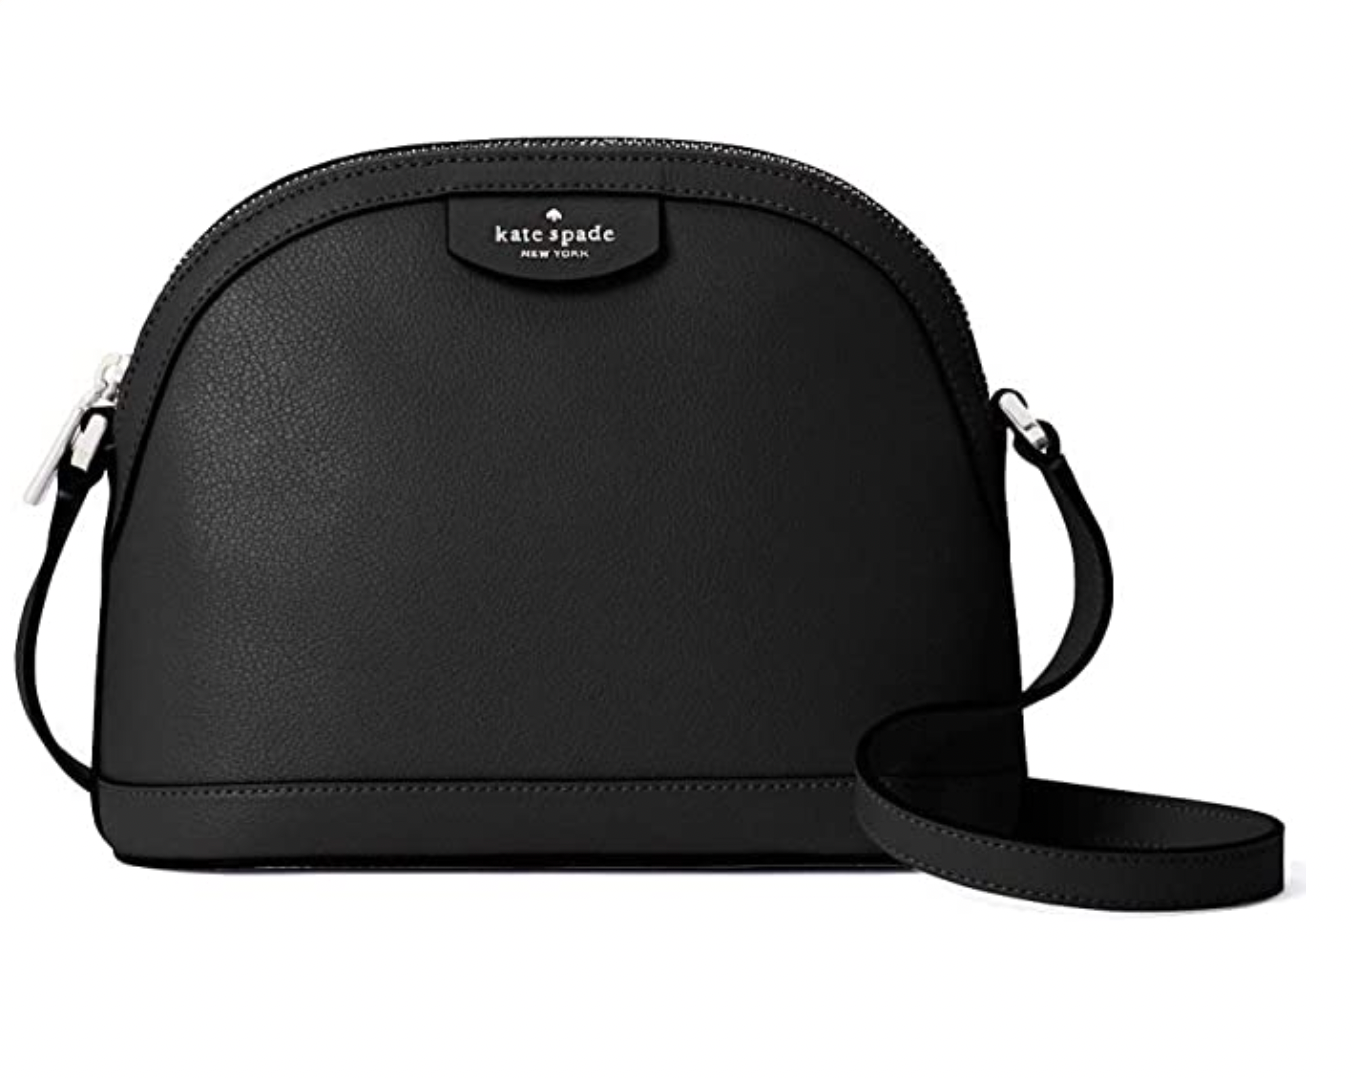 Kate Spade Staci Dome Saffiano Leather Crossbody Bag Purse Handbag